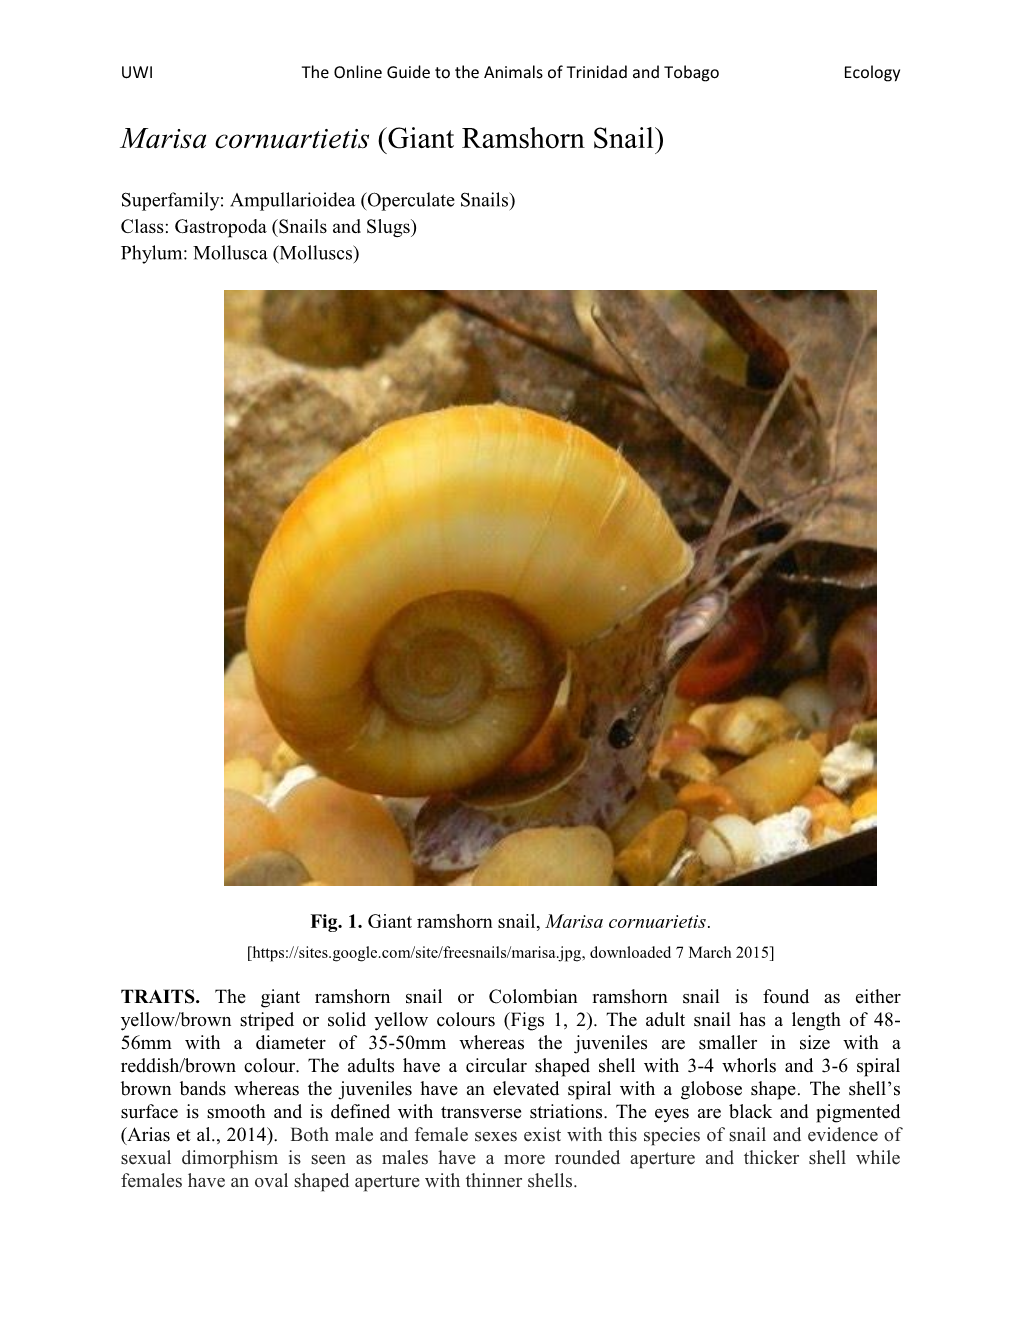 Marisa Cornuartietis (Giant Ramshorn Snail)